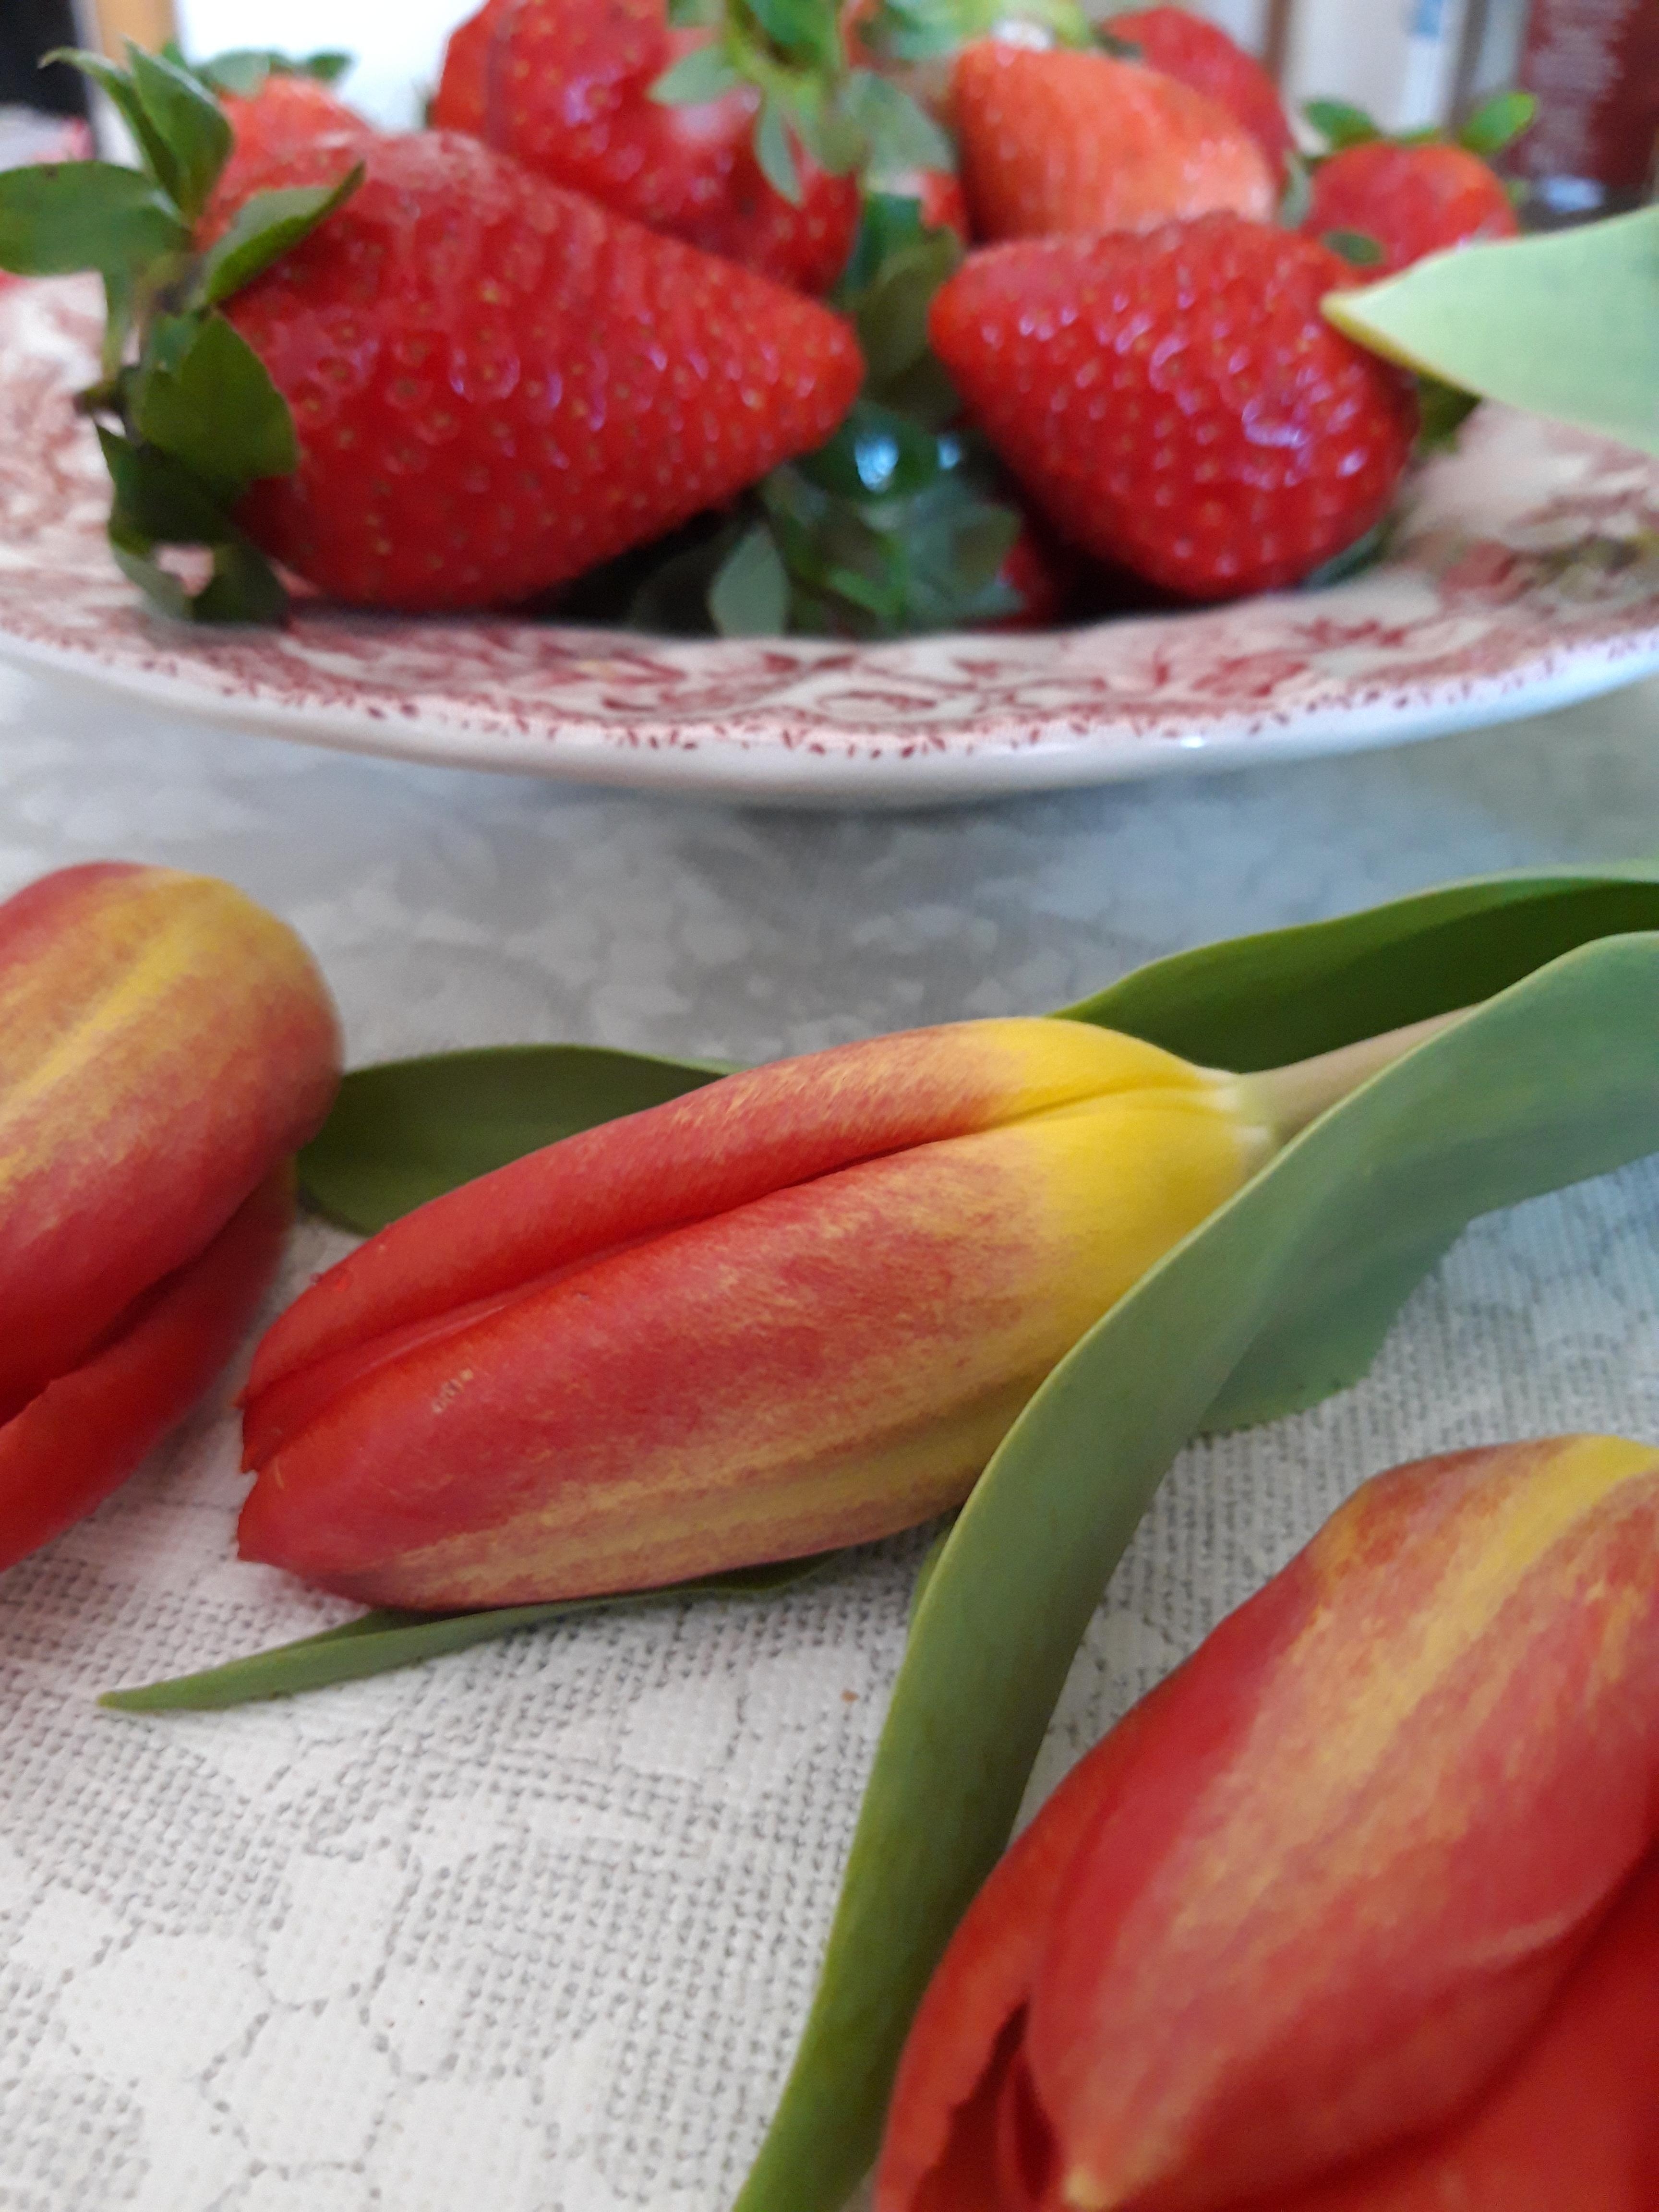 #Tulpe trifft auf #Erdbeere. 